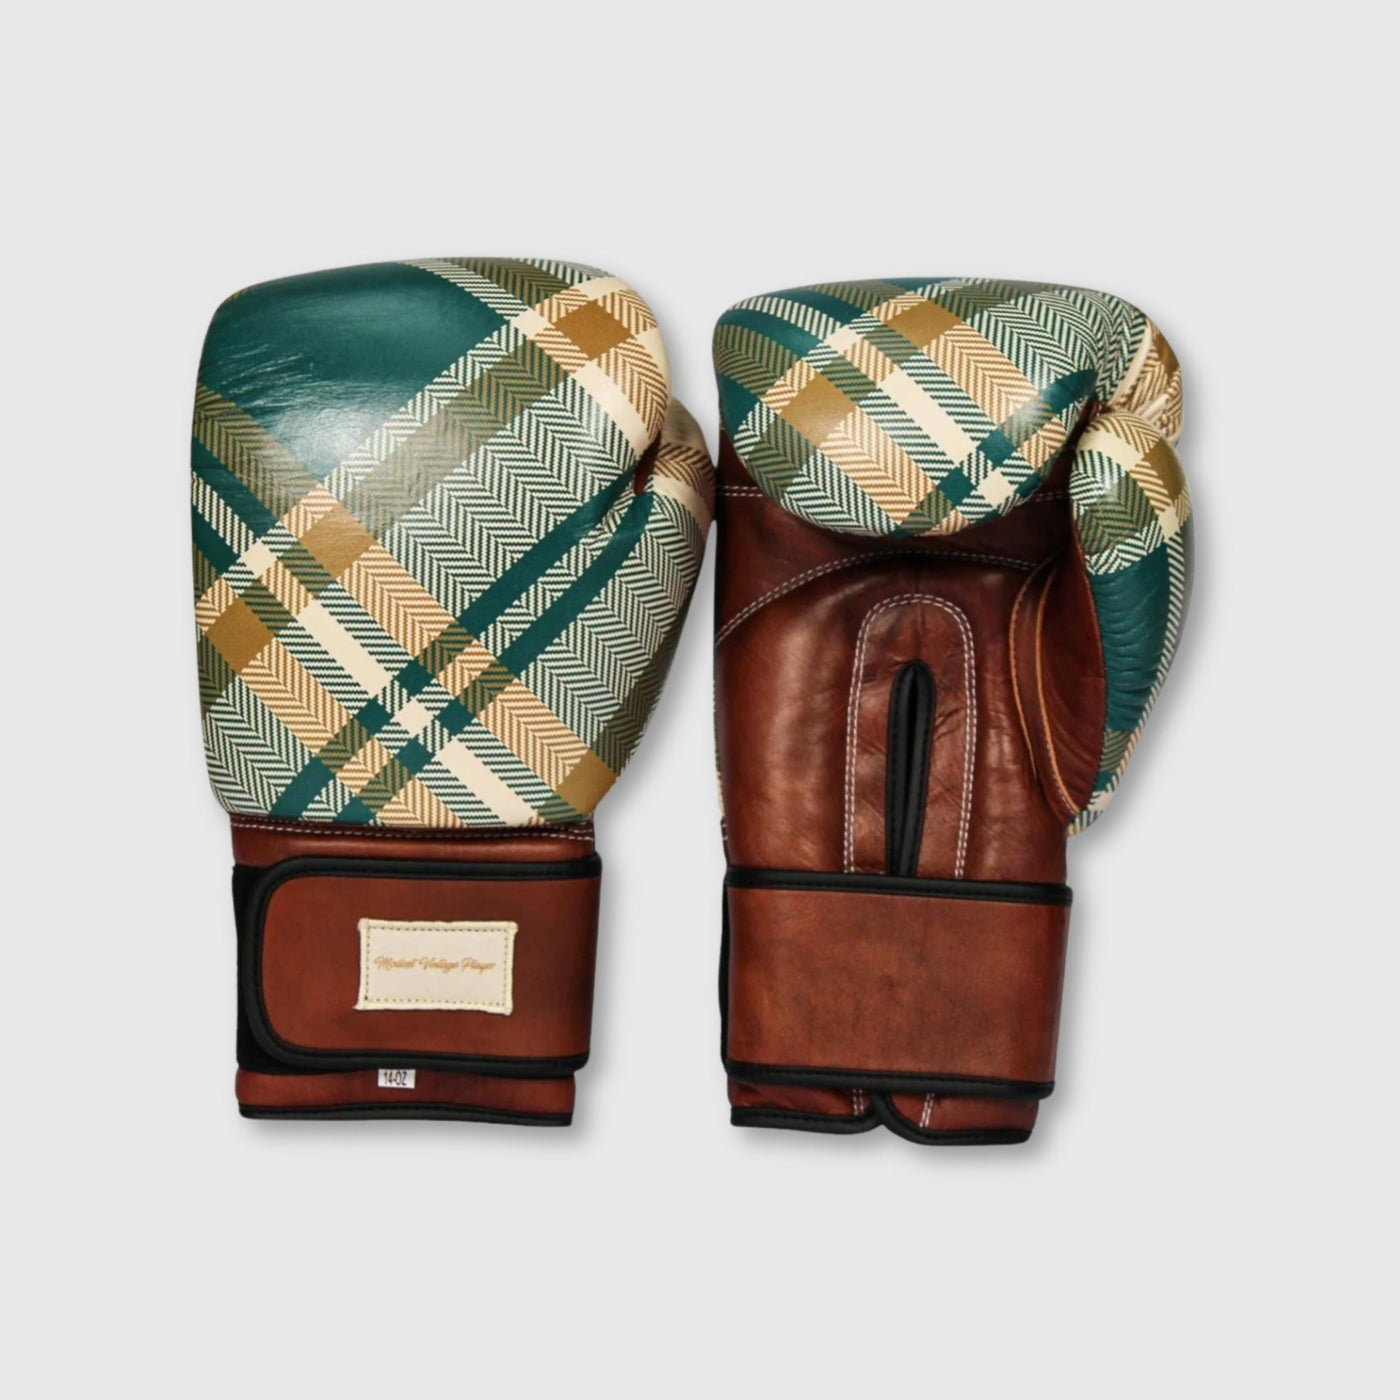 PRO Tartan Leather Boxing Gloves (Strap Up) Limited Edition - MODEST VINTAGE PLAYER LTD